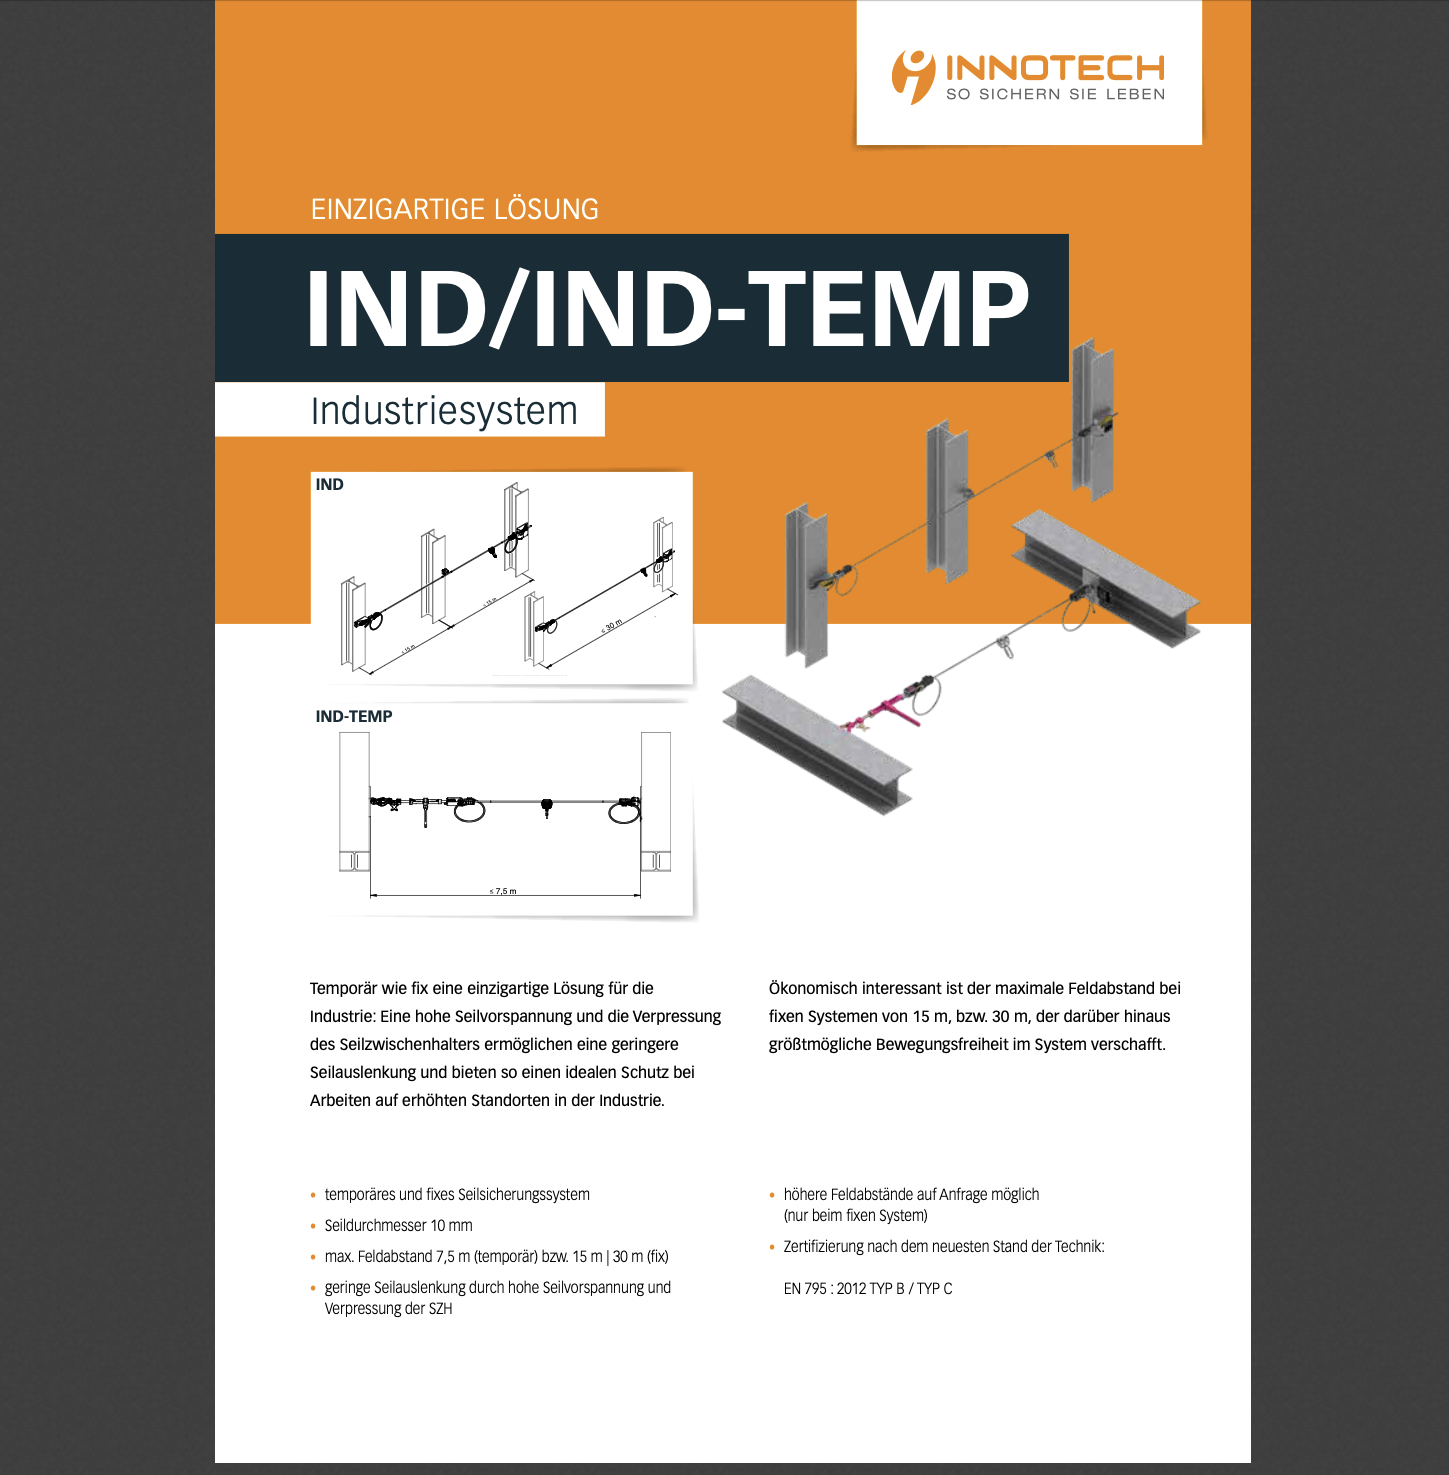 Innotech IND/IND-TEMP Industriesystem